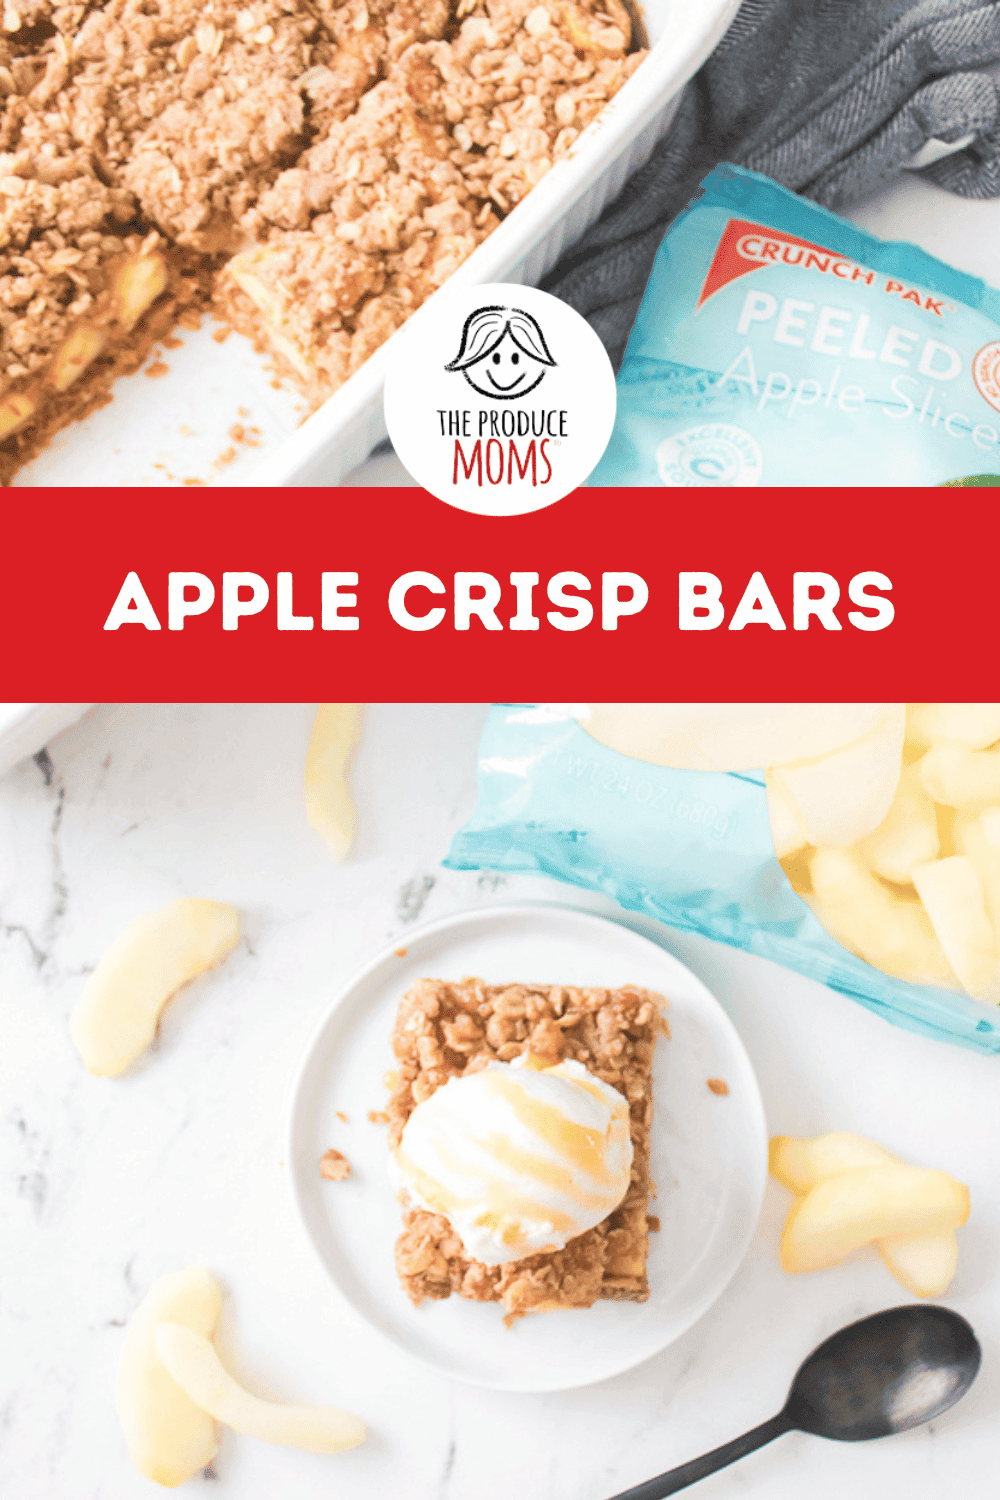 Pinterst Pin: Apple Crisp Bars